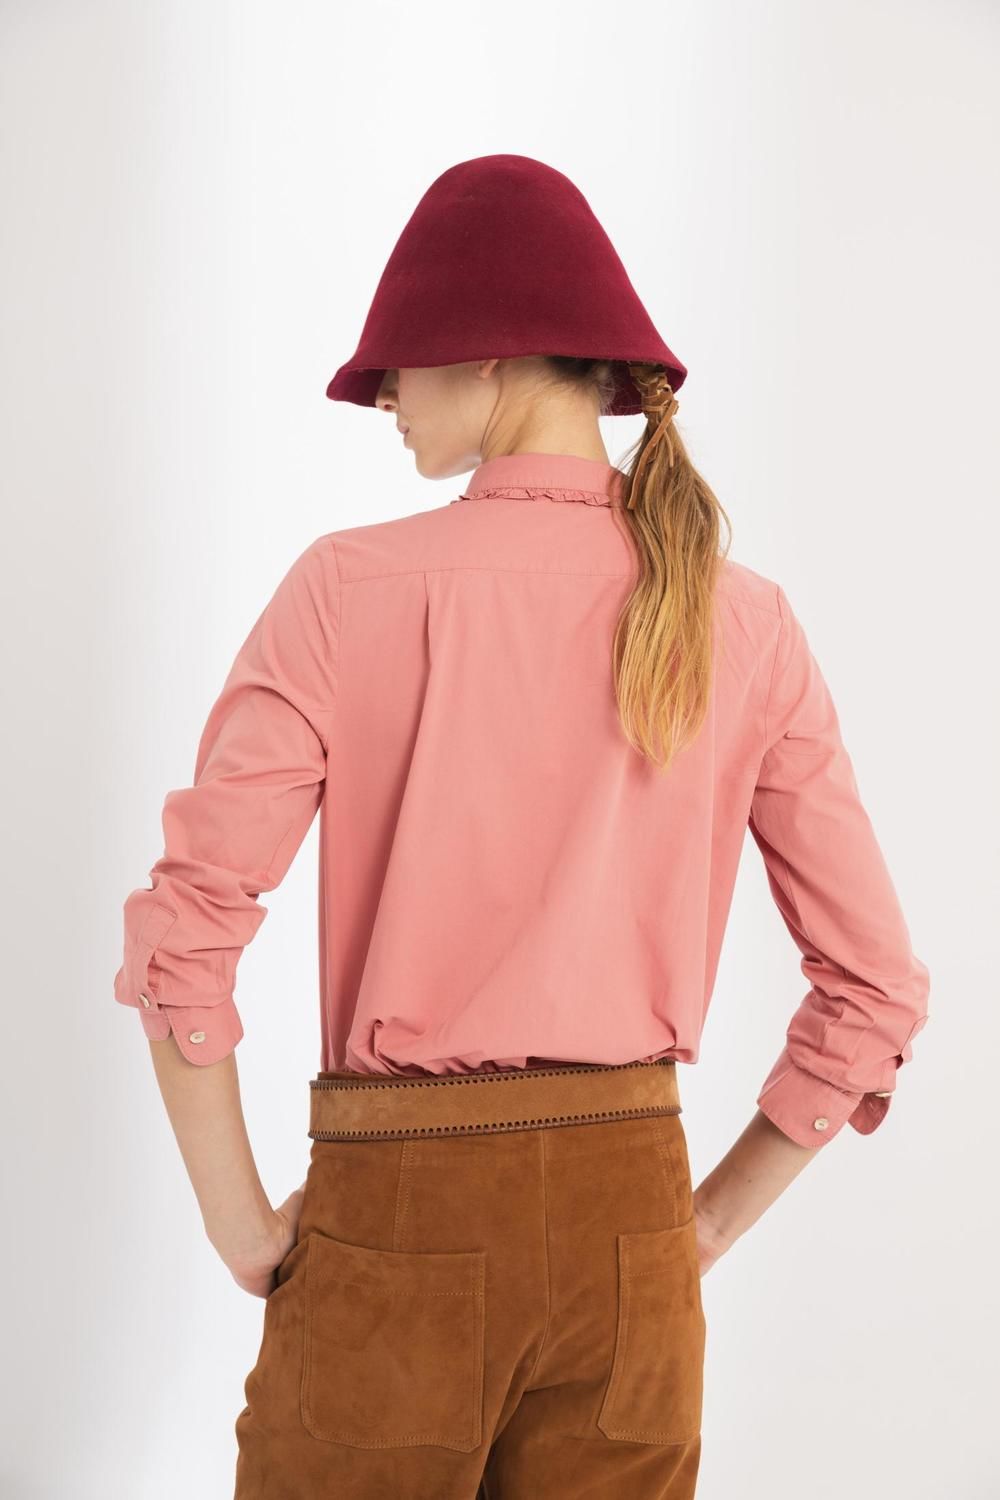 Camisa Floppy en Algodón - ROSA rosado m